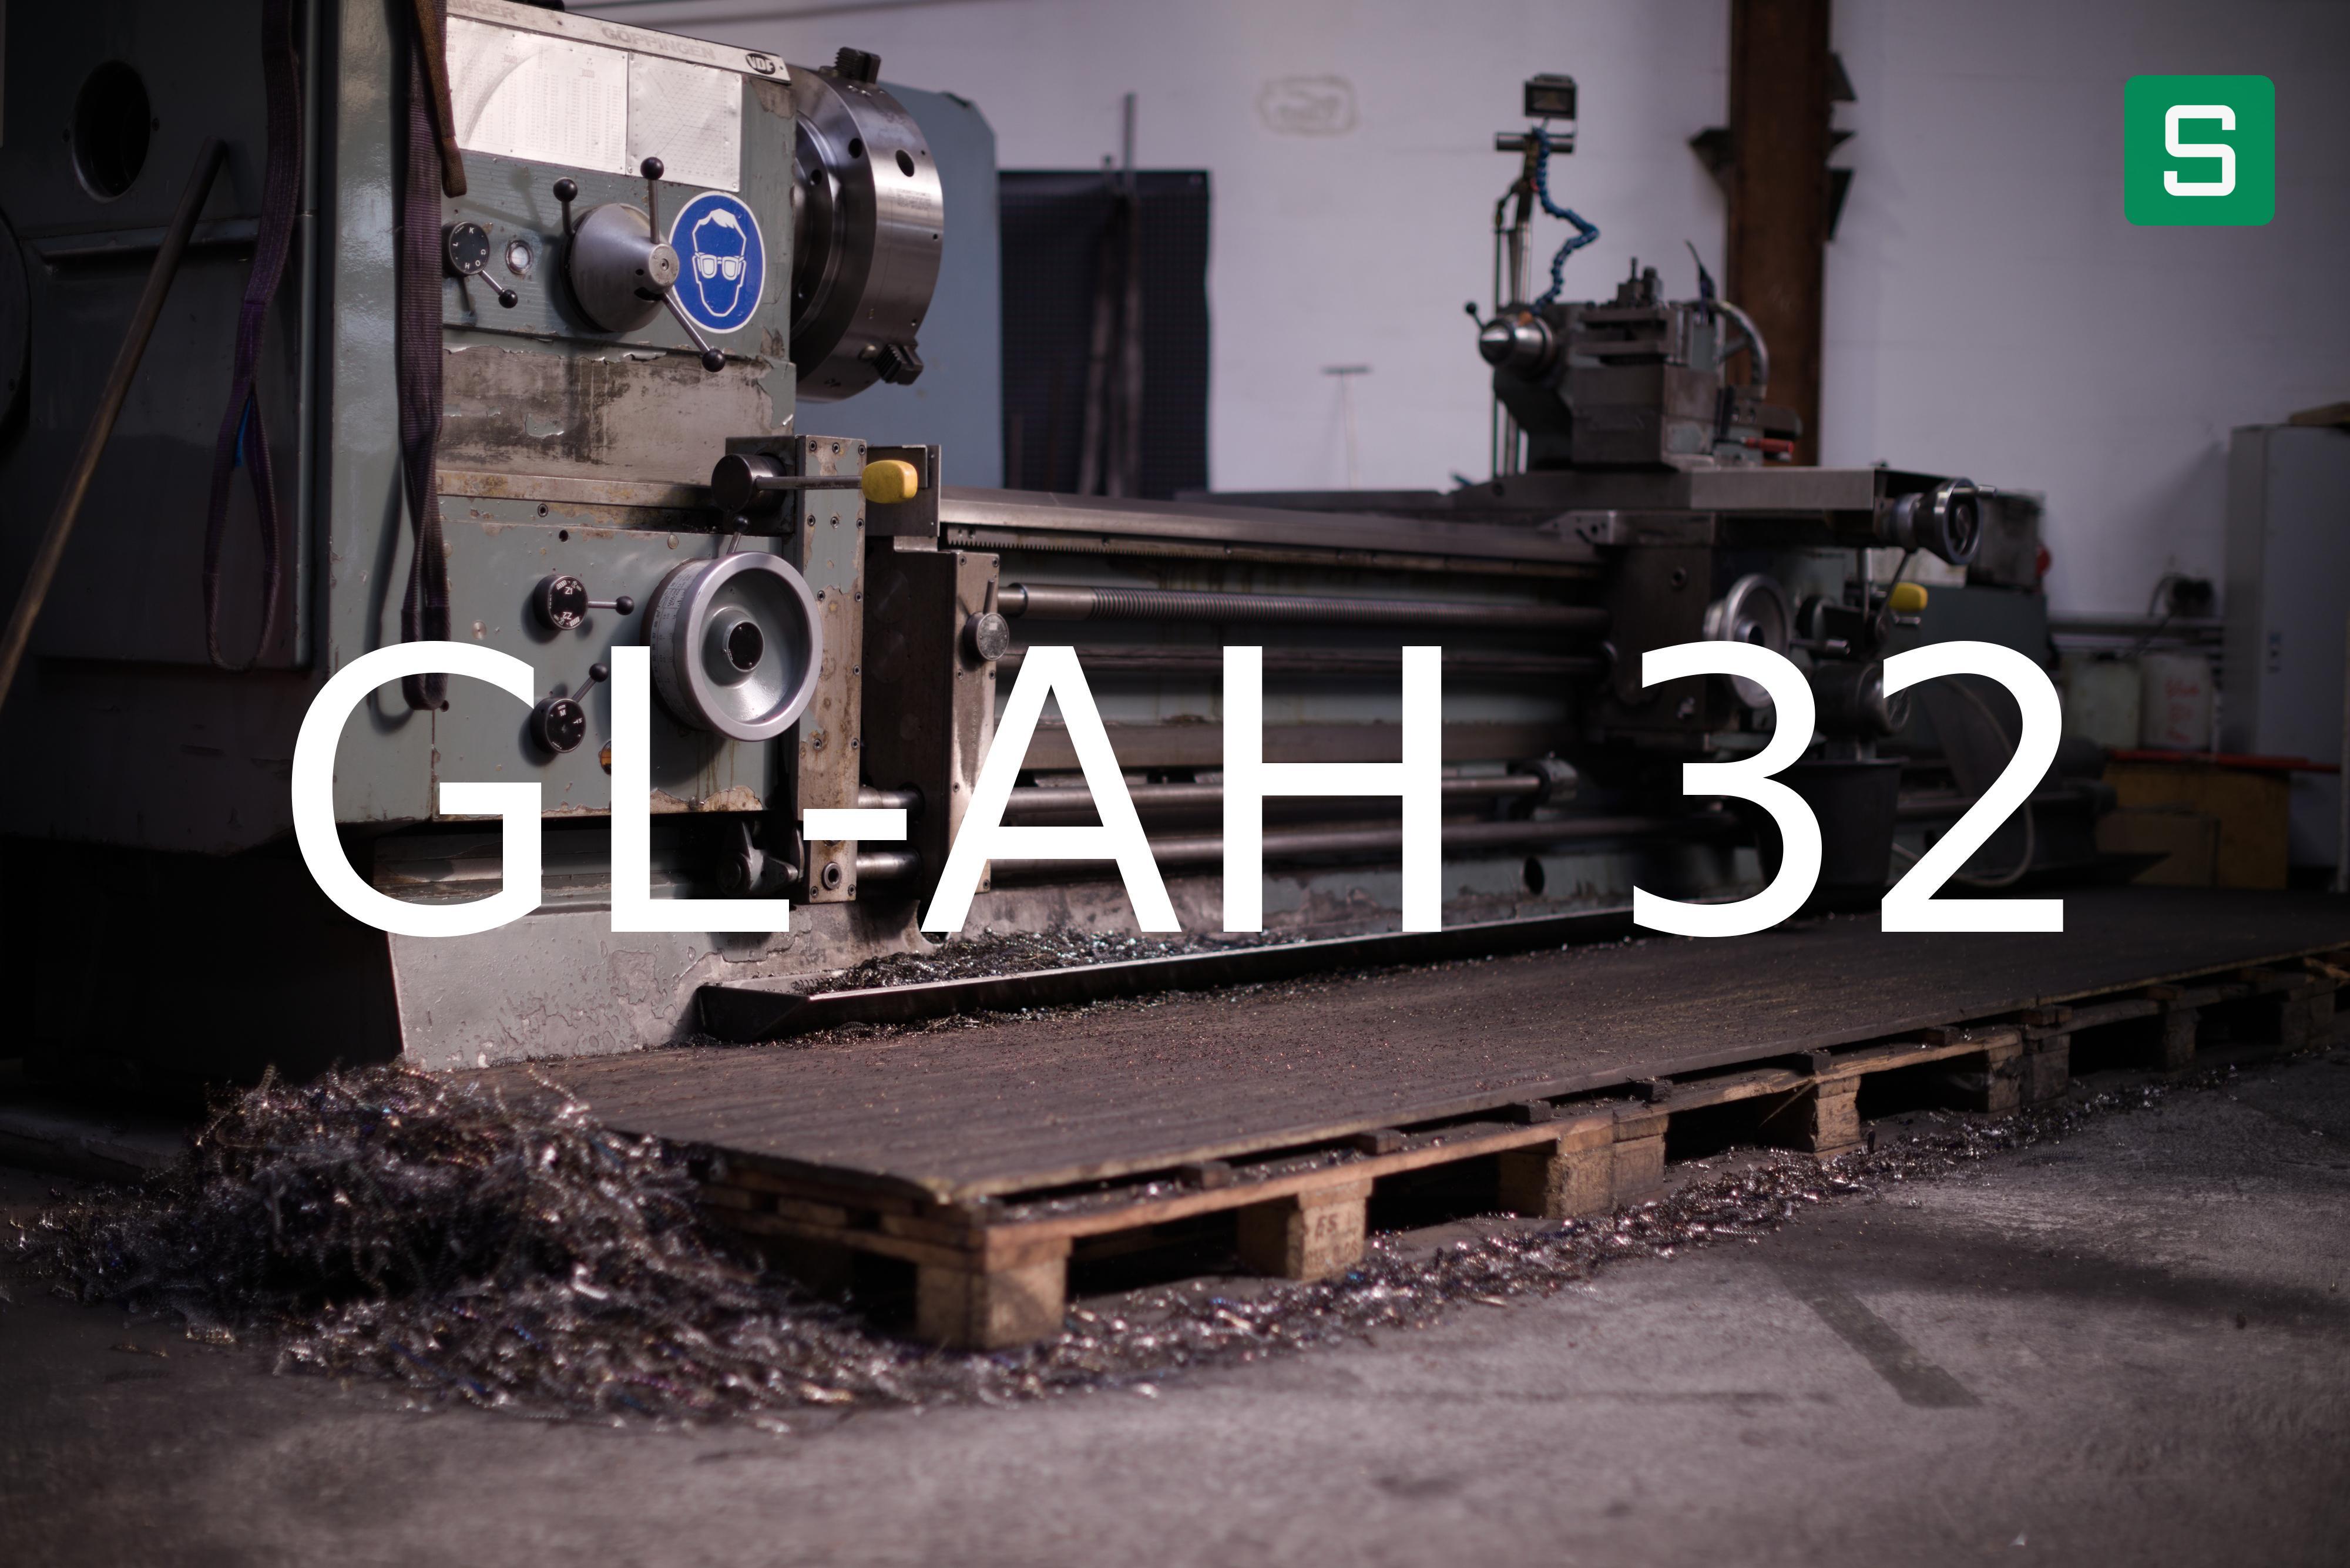 Steel Material: GL-AH 32